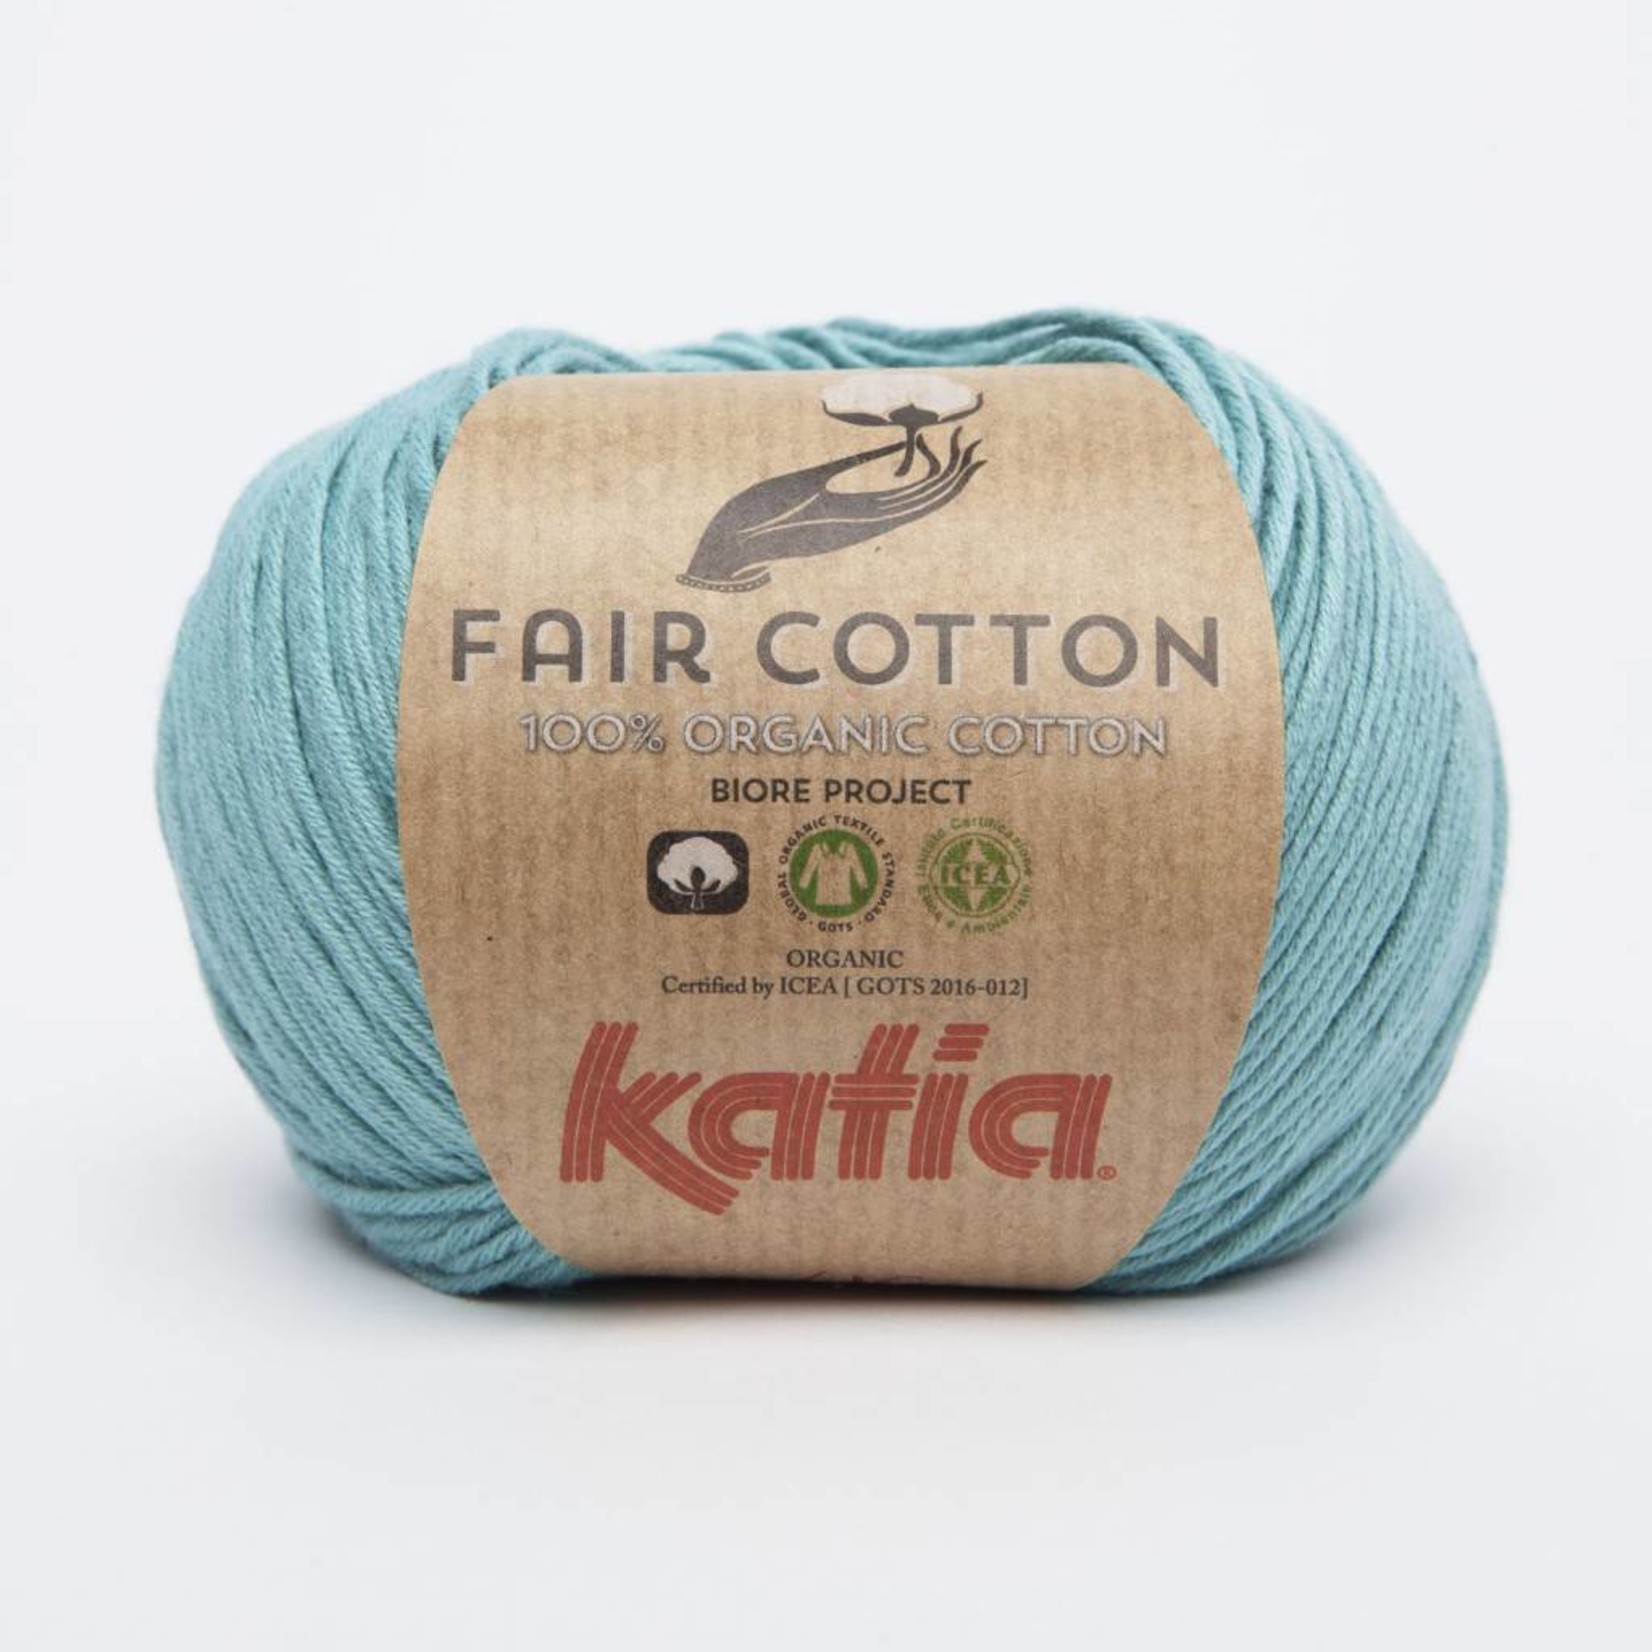 Katia Fair Cotton 16 Turqoise - Biore Project